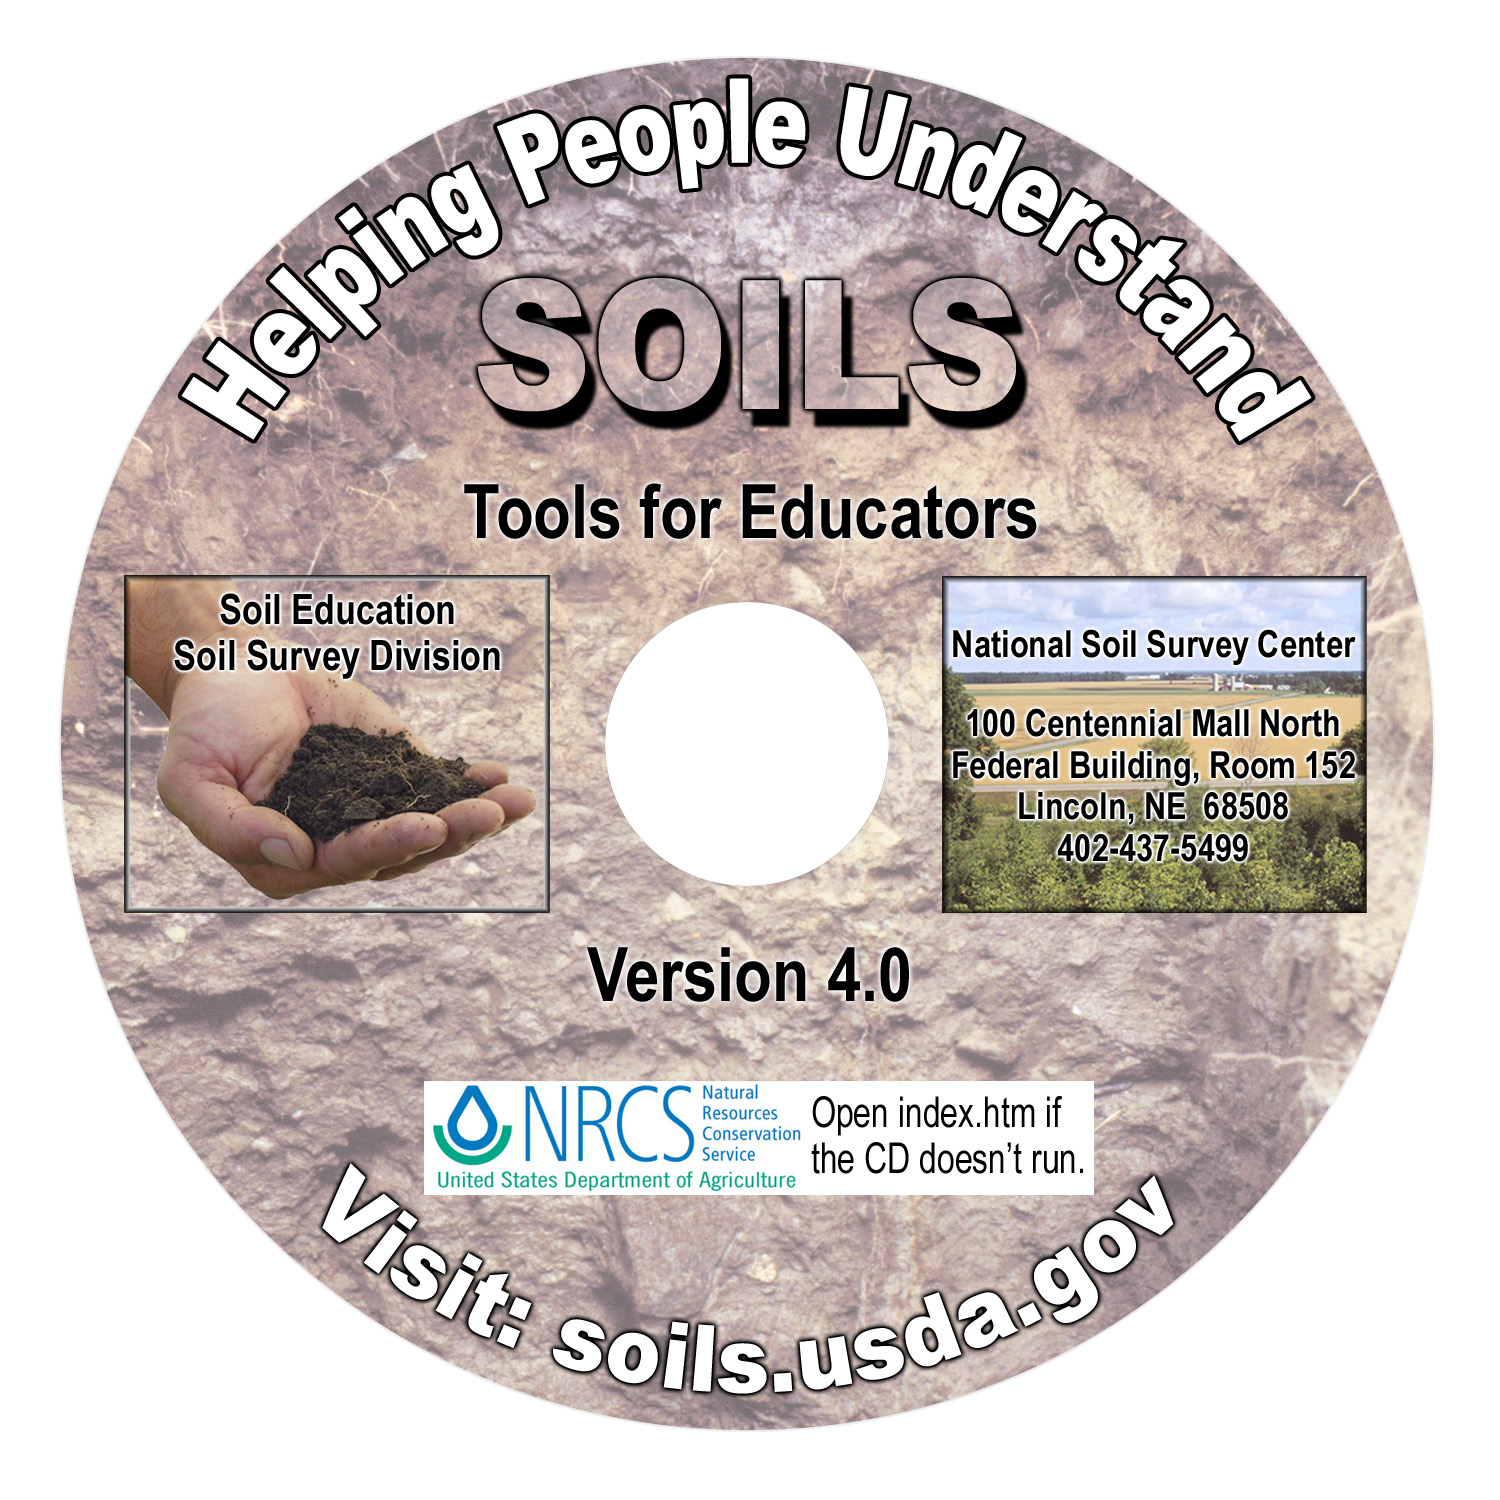 Soil-Helping People Understand Soils CD 4.0